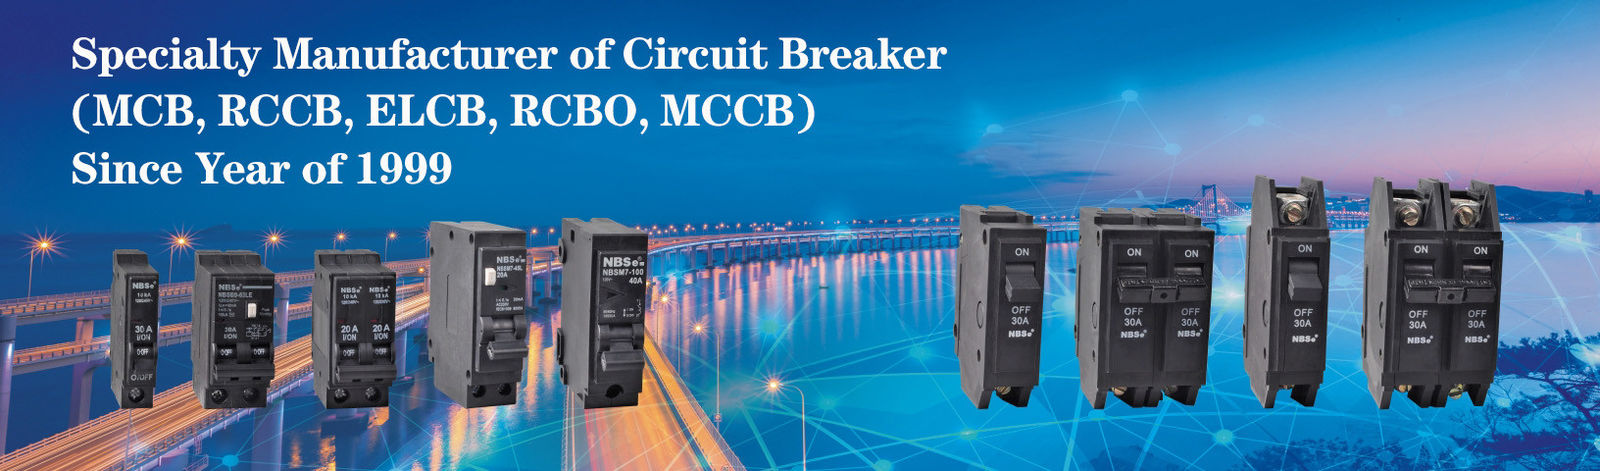 Circuit Breaker mikro